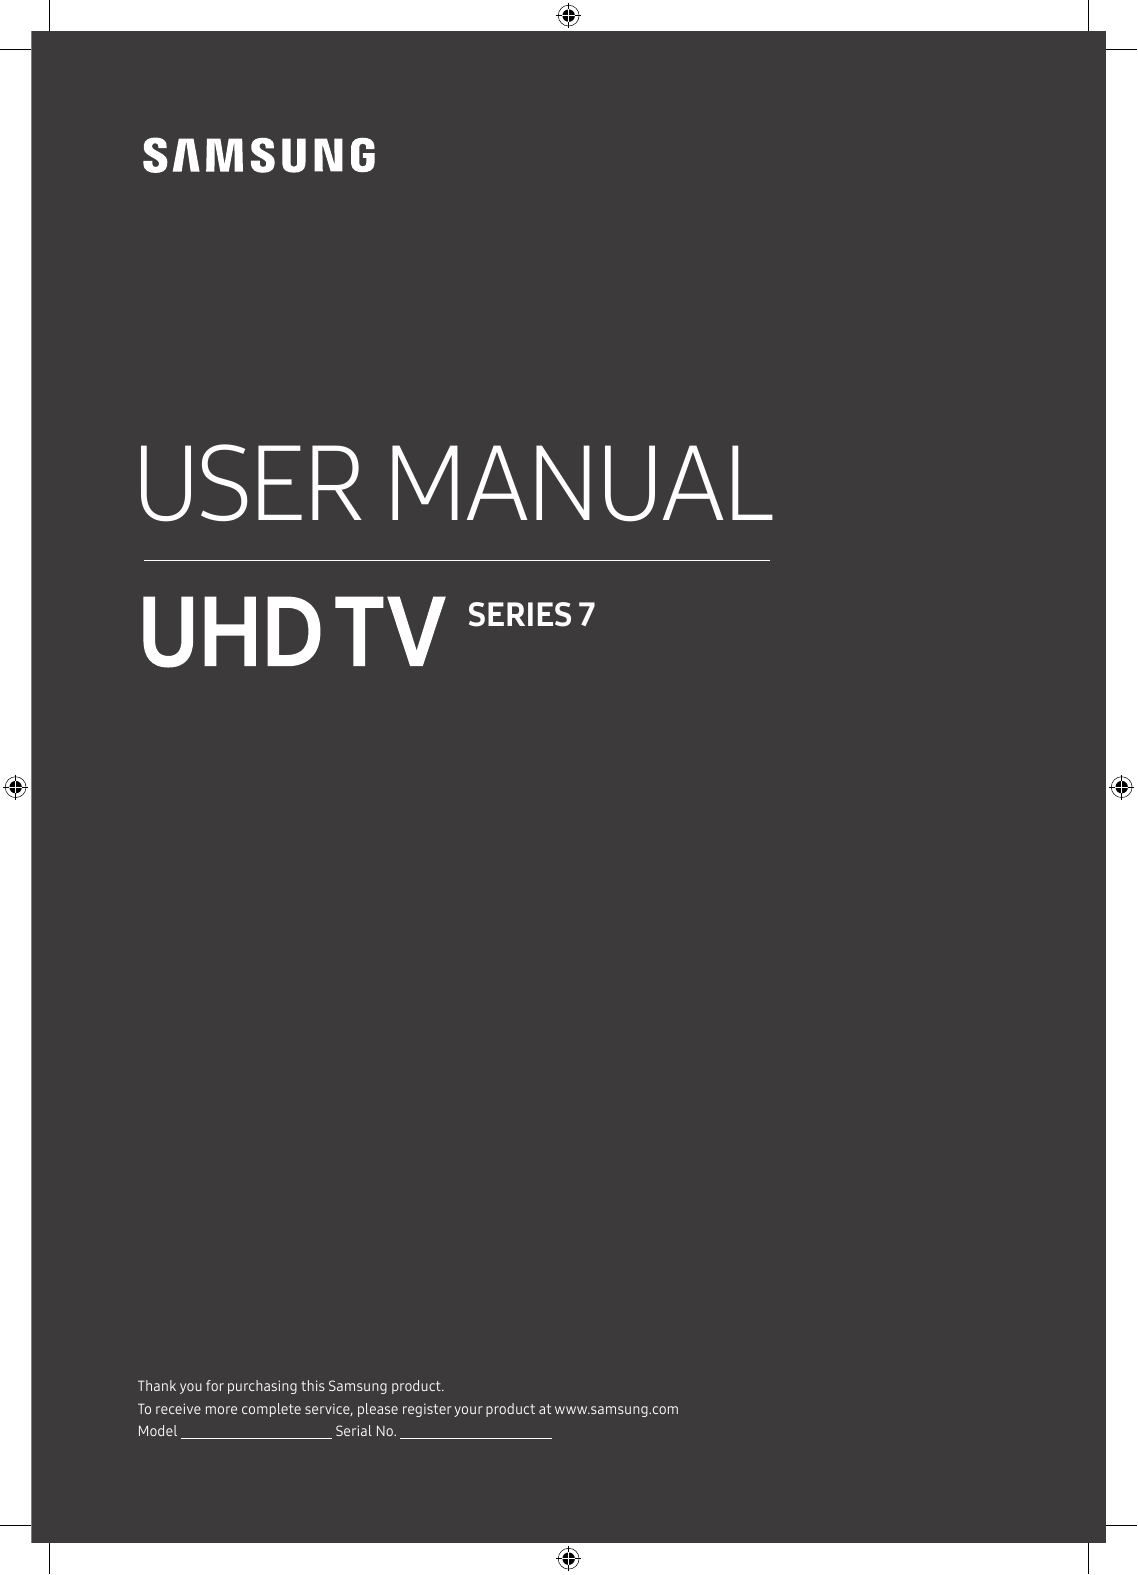 Samsung Smart Tv 55 Inch User Manual - Samsung Smartphone Review